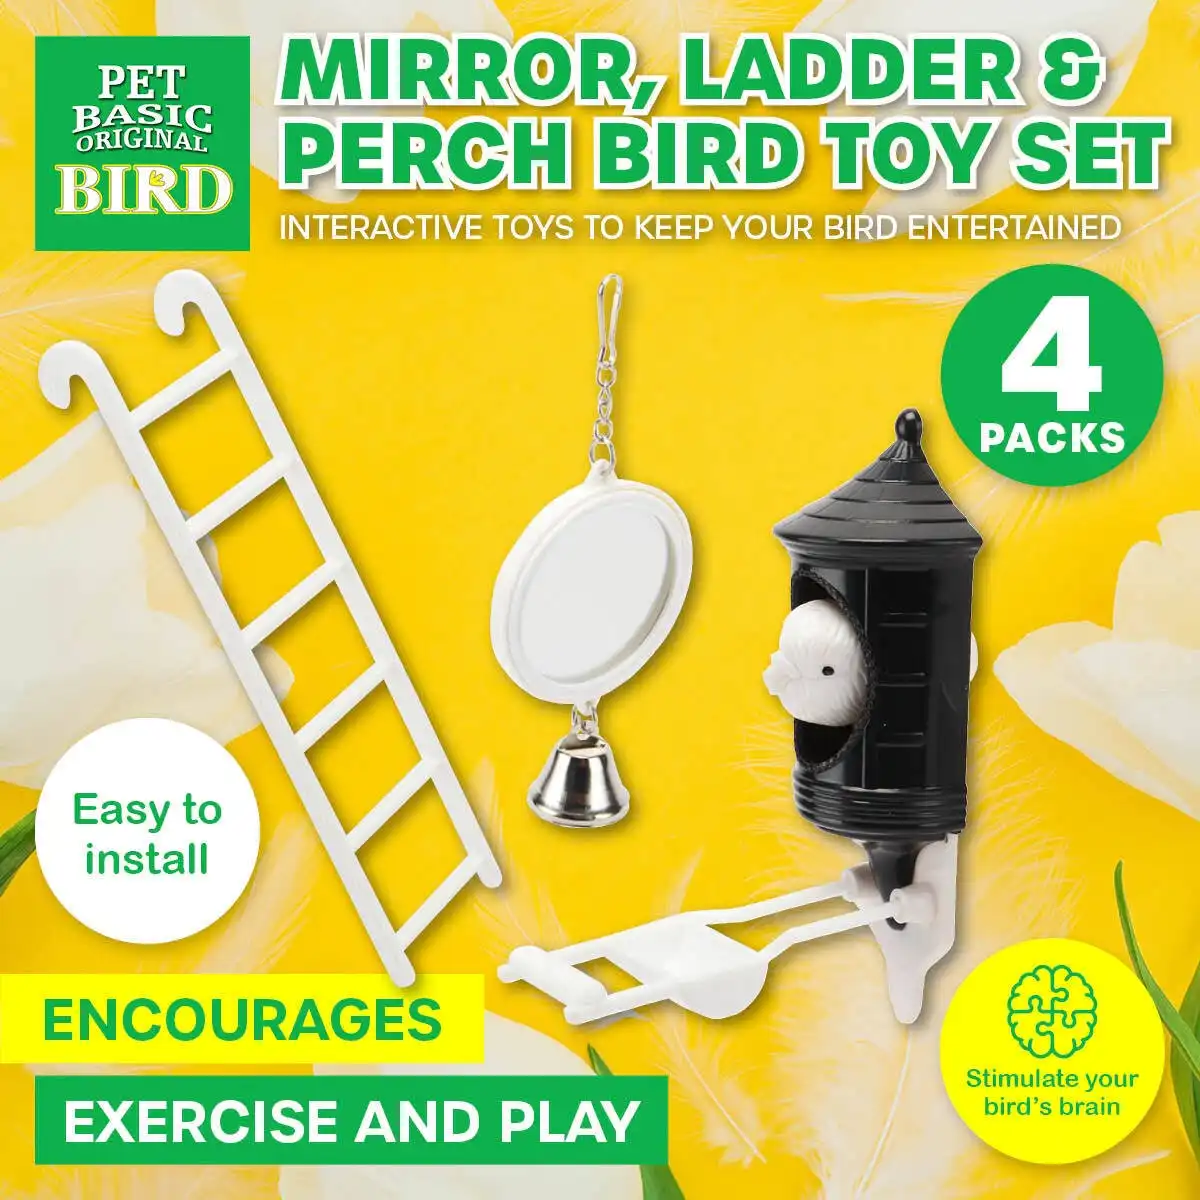 Pet Basic® 4PK Bird Toy Set Mirror Ladder Perch Fun Entertaining Interactive